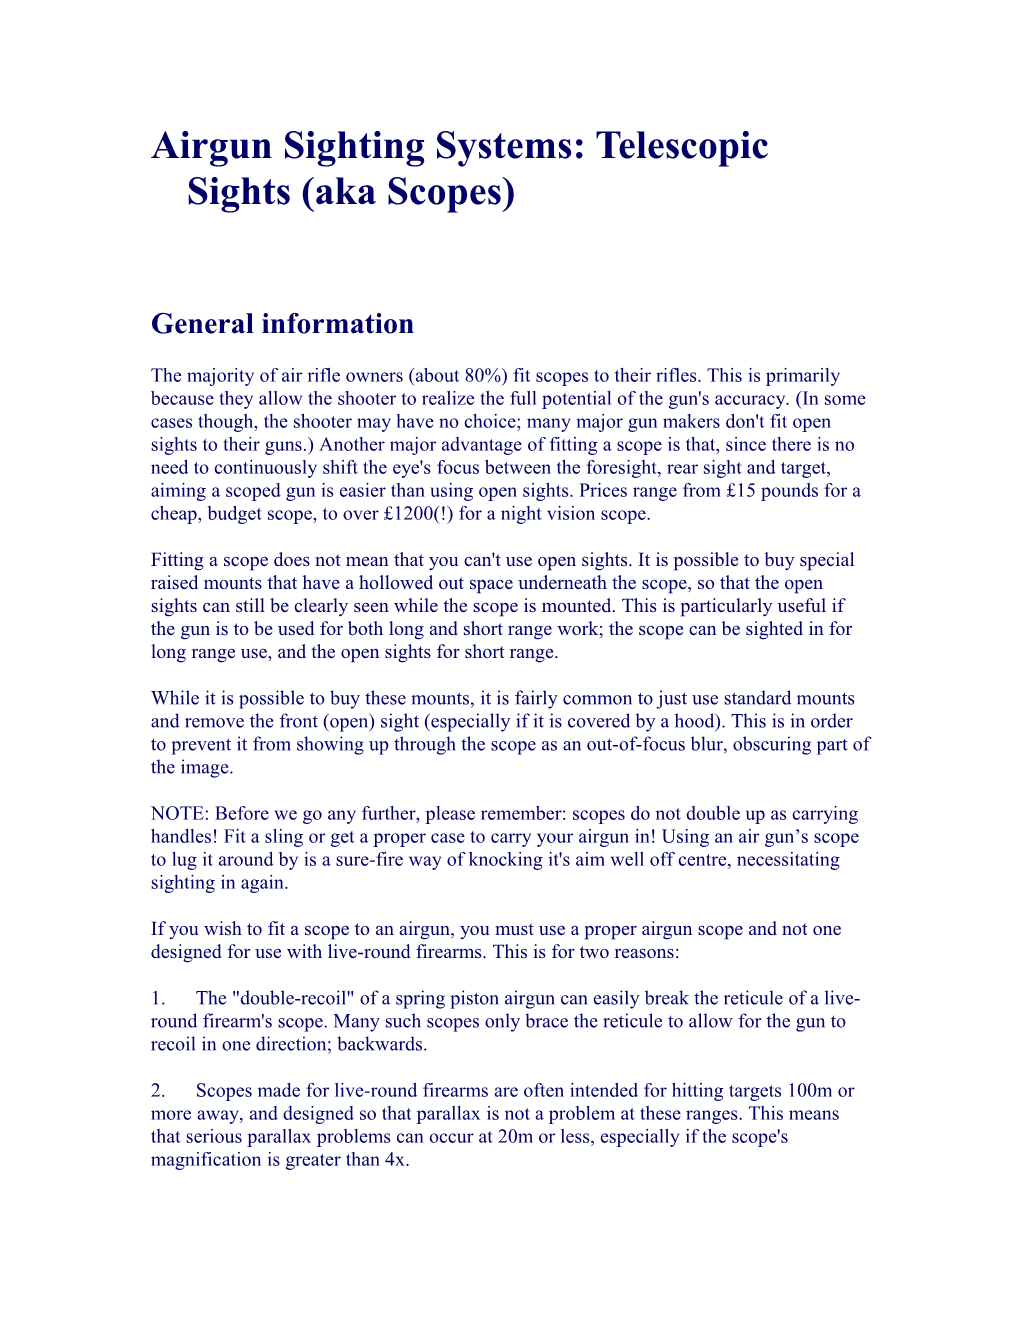 Airgun Sighting Systems: Telescopic Sights (Aka Scopes)